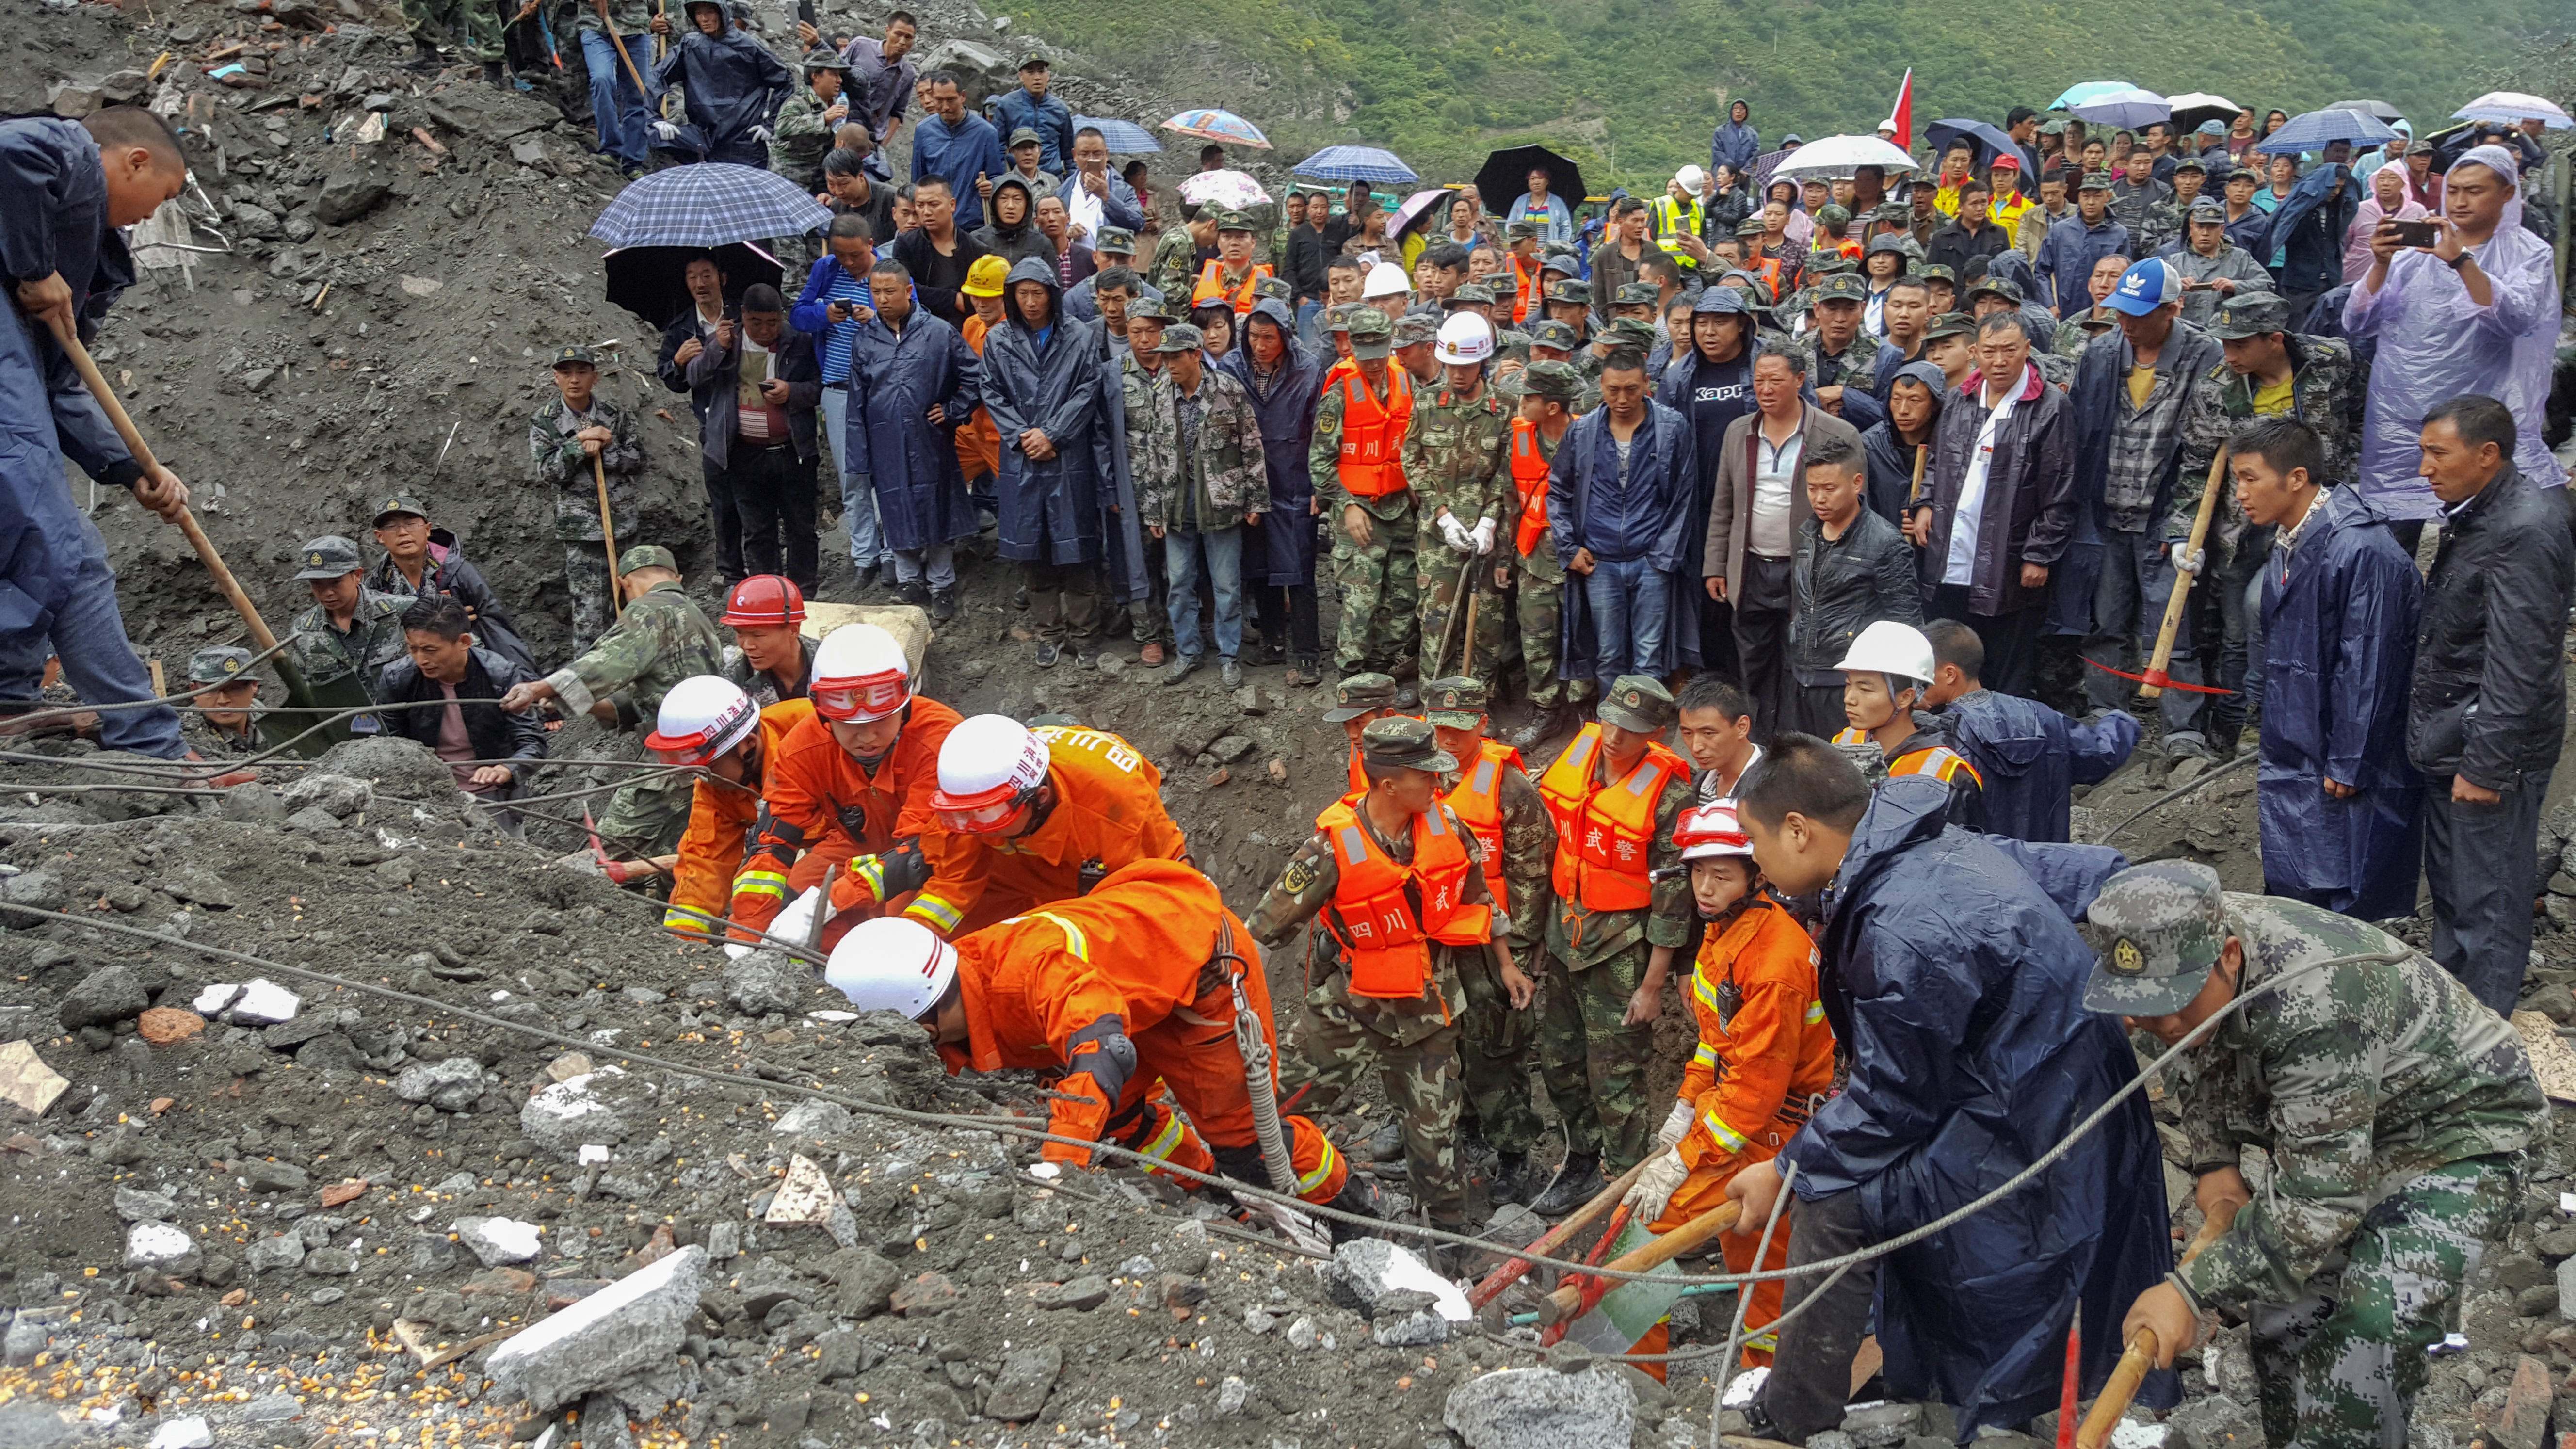 Massive landslide buries more than 120 people